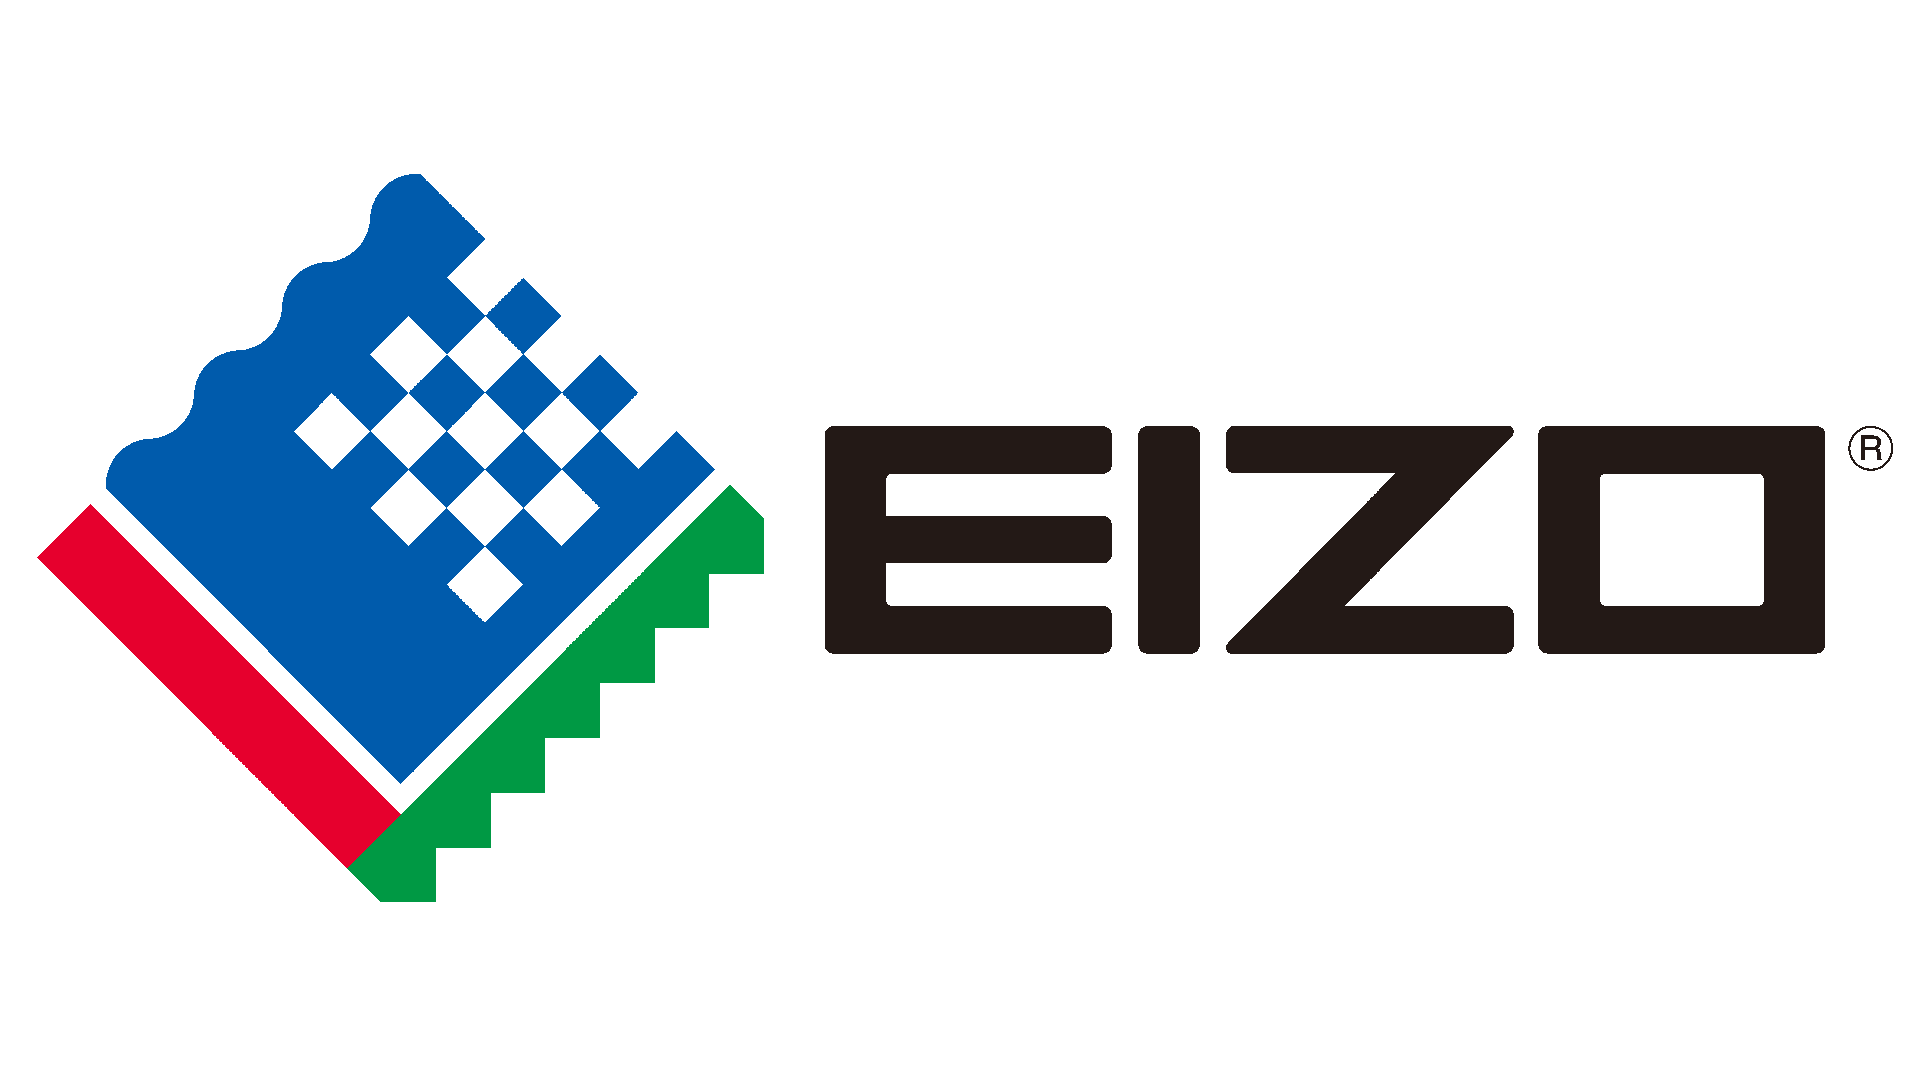 Brand: EZIO